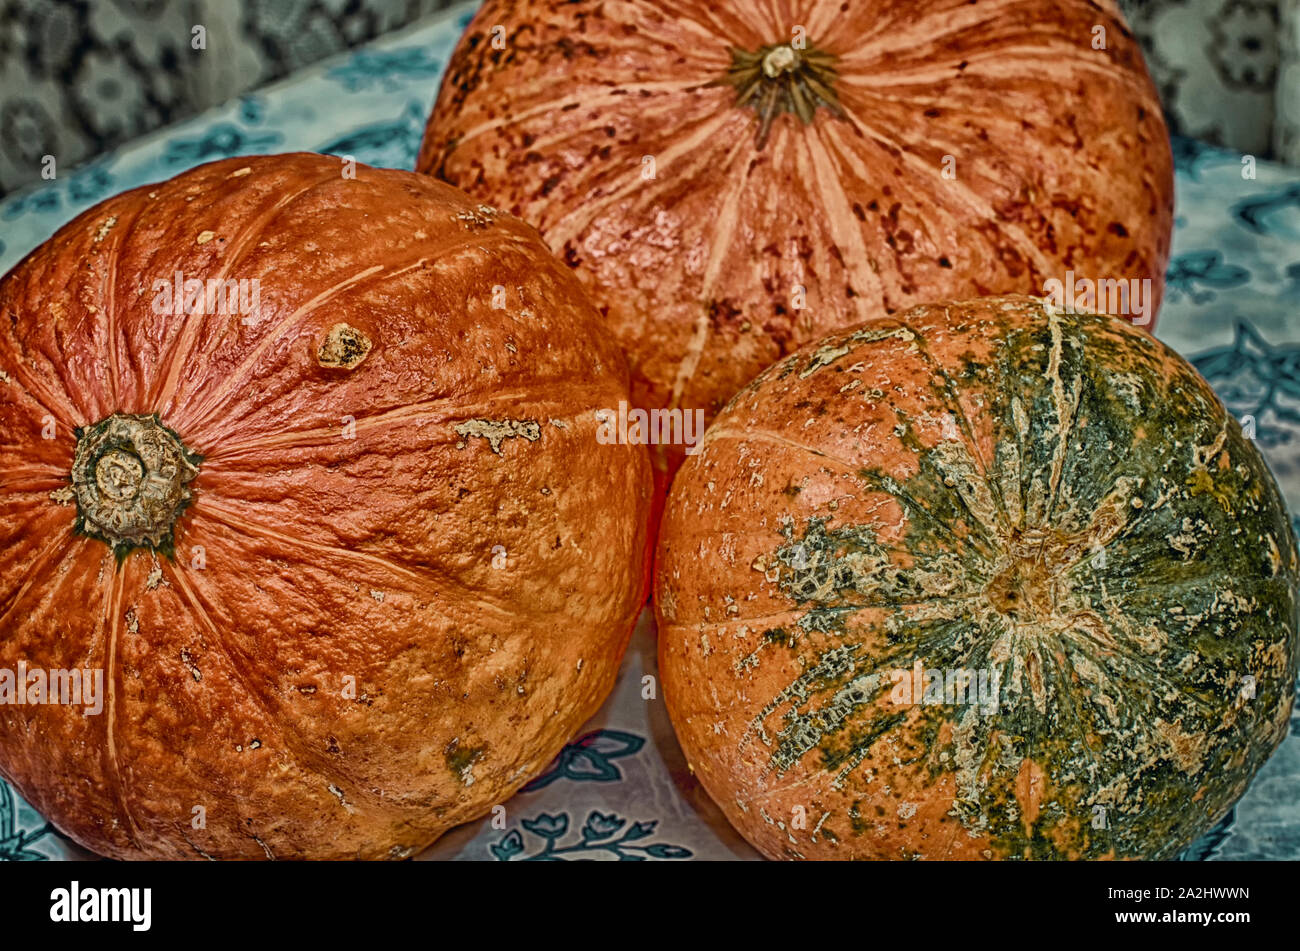 Three bright orange pumpkins with interesting bark structure close-up Stock Photo